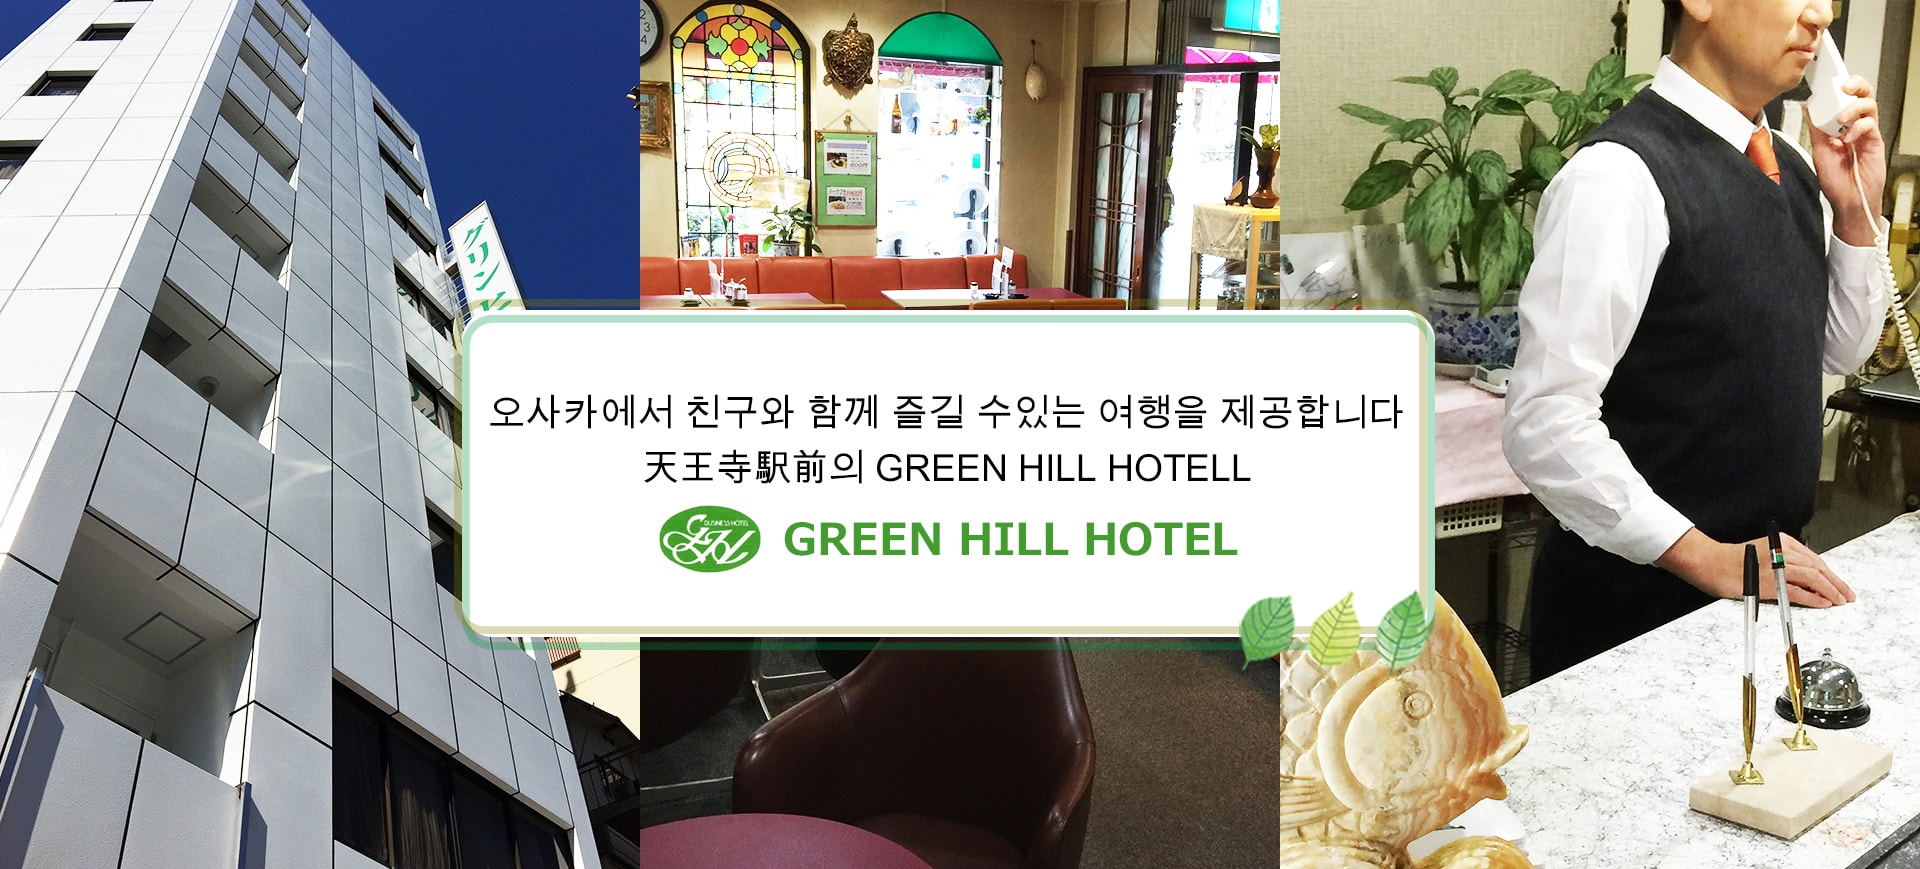 Green hill hotel